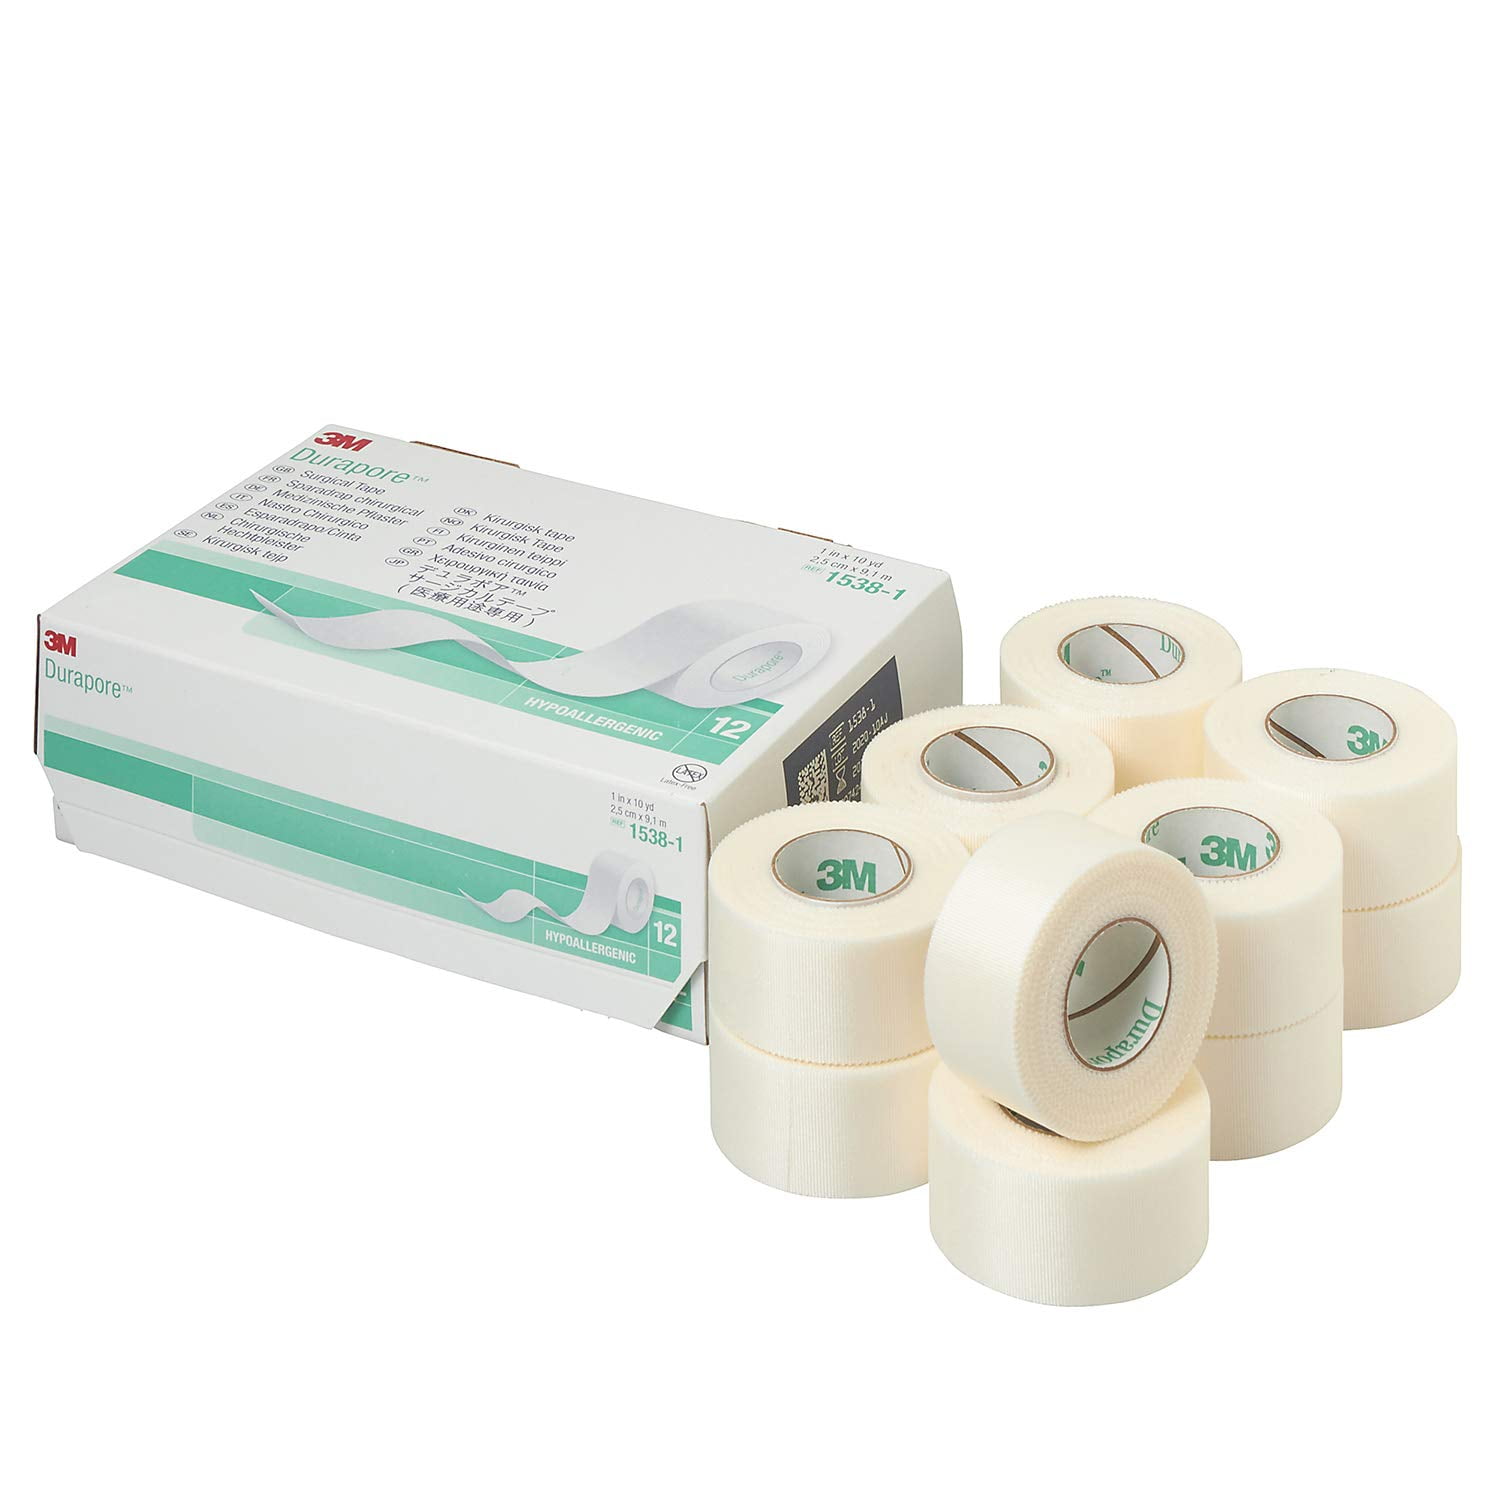 3M™ Durapore™ Surgical Tape 1538-2, 2 inch x 10 yard (5cm x 9,1m), 6  Rolls/Box